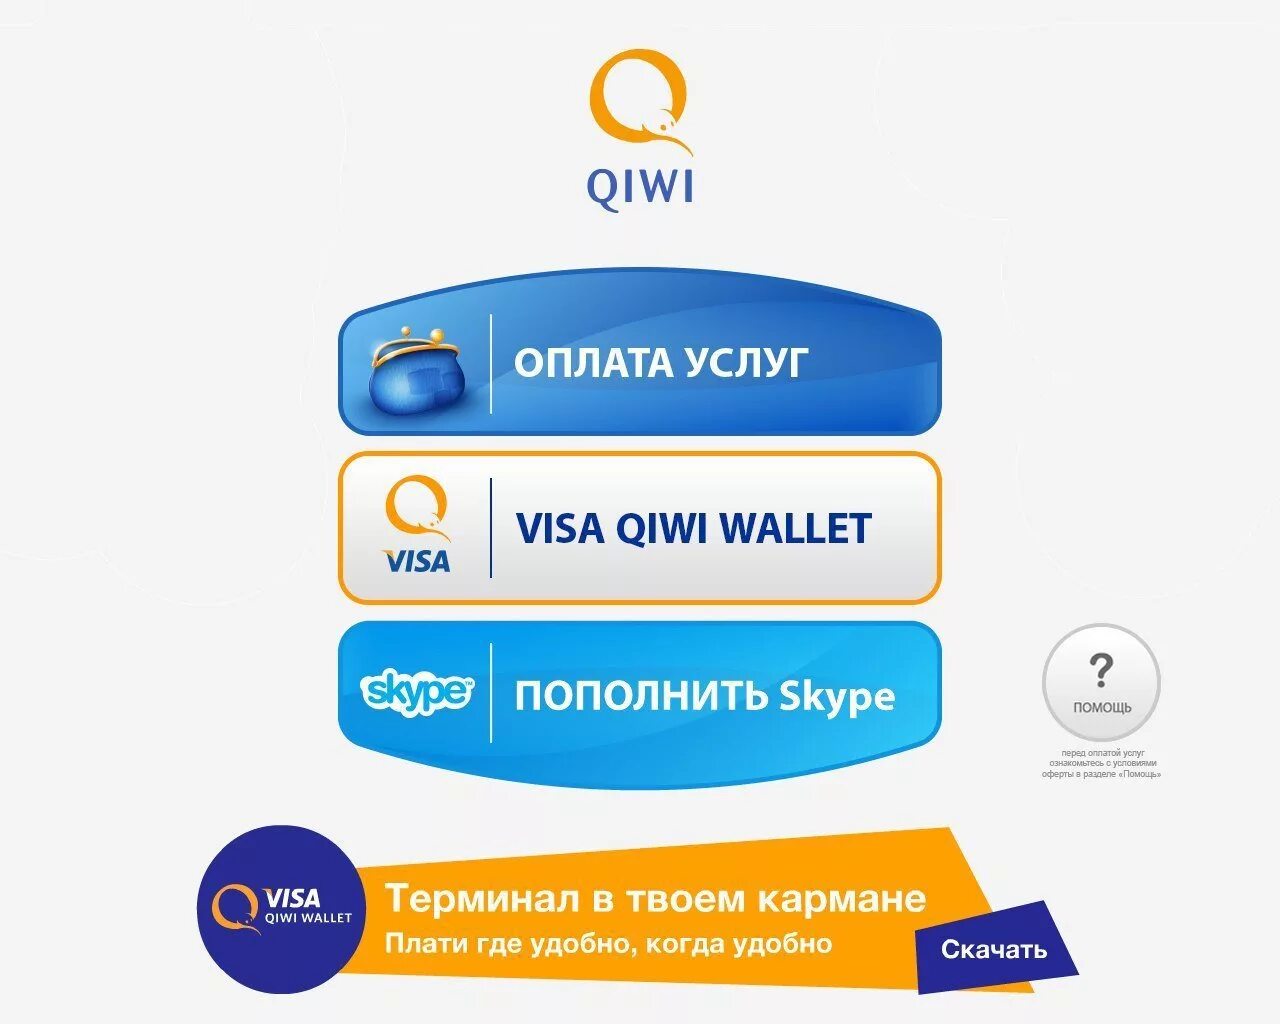 QIWI кошелек. Киви электронный кошелек. Киви виза. Visa QIWI Wallet пополнение. Visa wallet